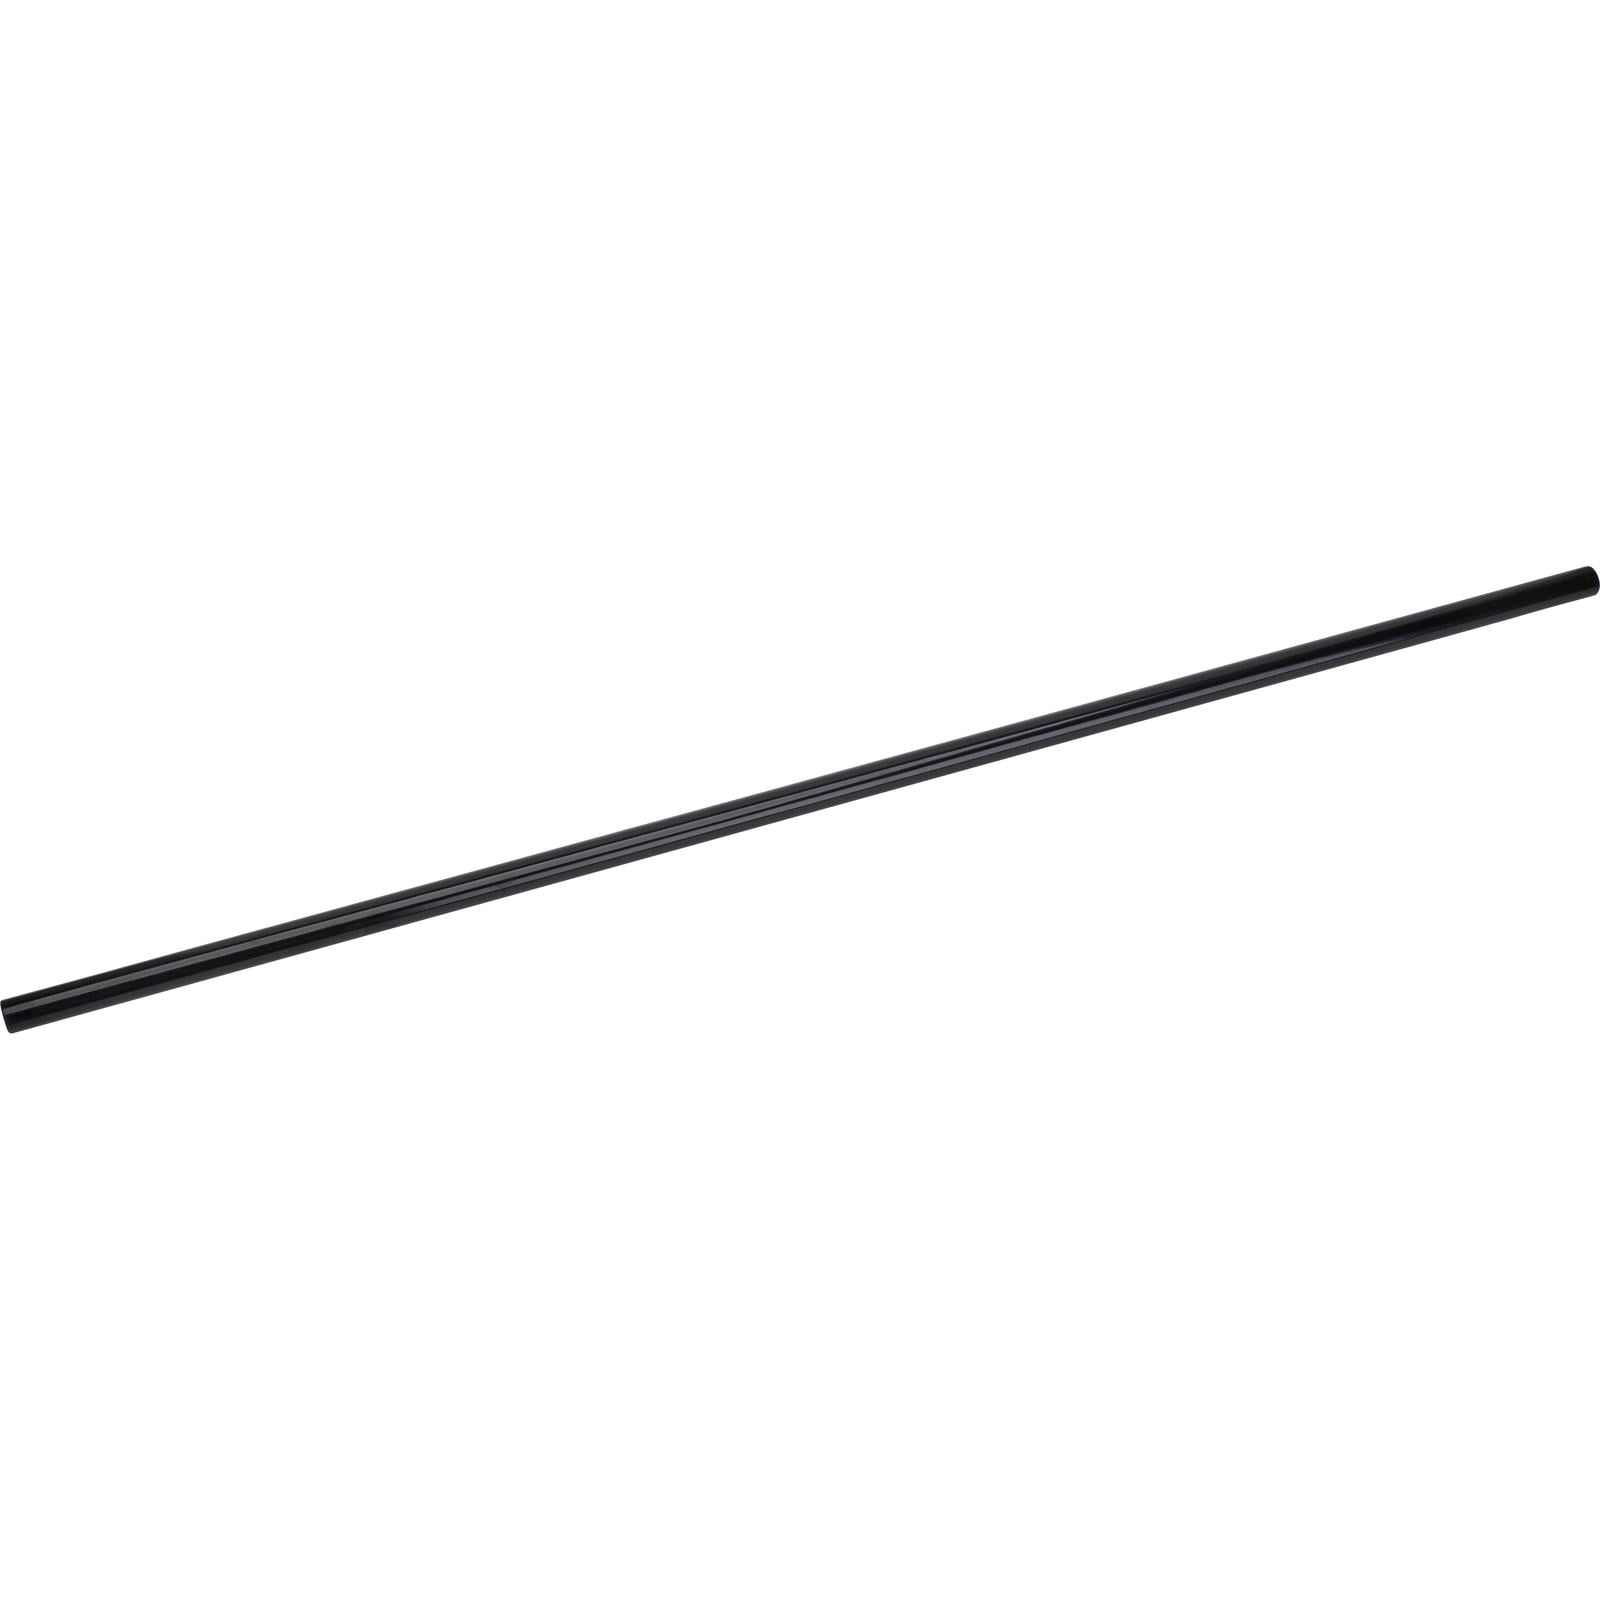 49 Inch Plain Steel Hot Rod Tie Rod/Drag Link Sleeve for 5/8-18 Ends 